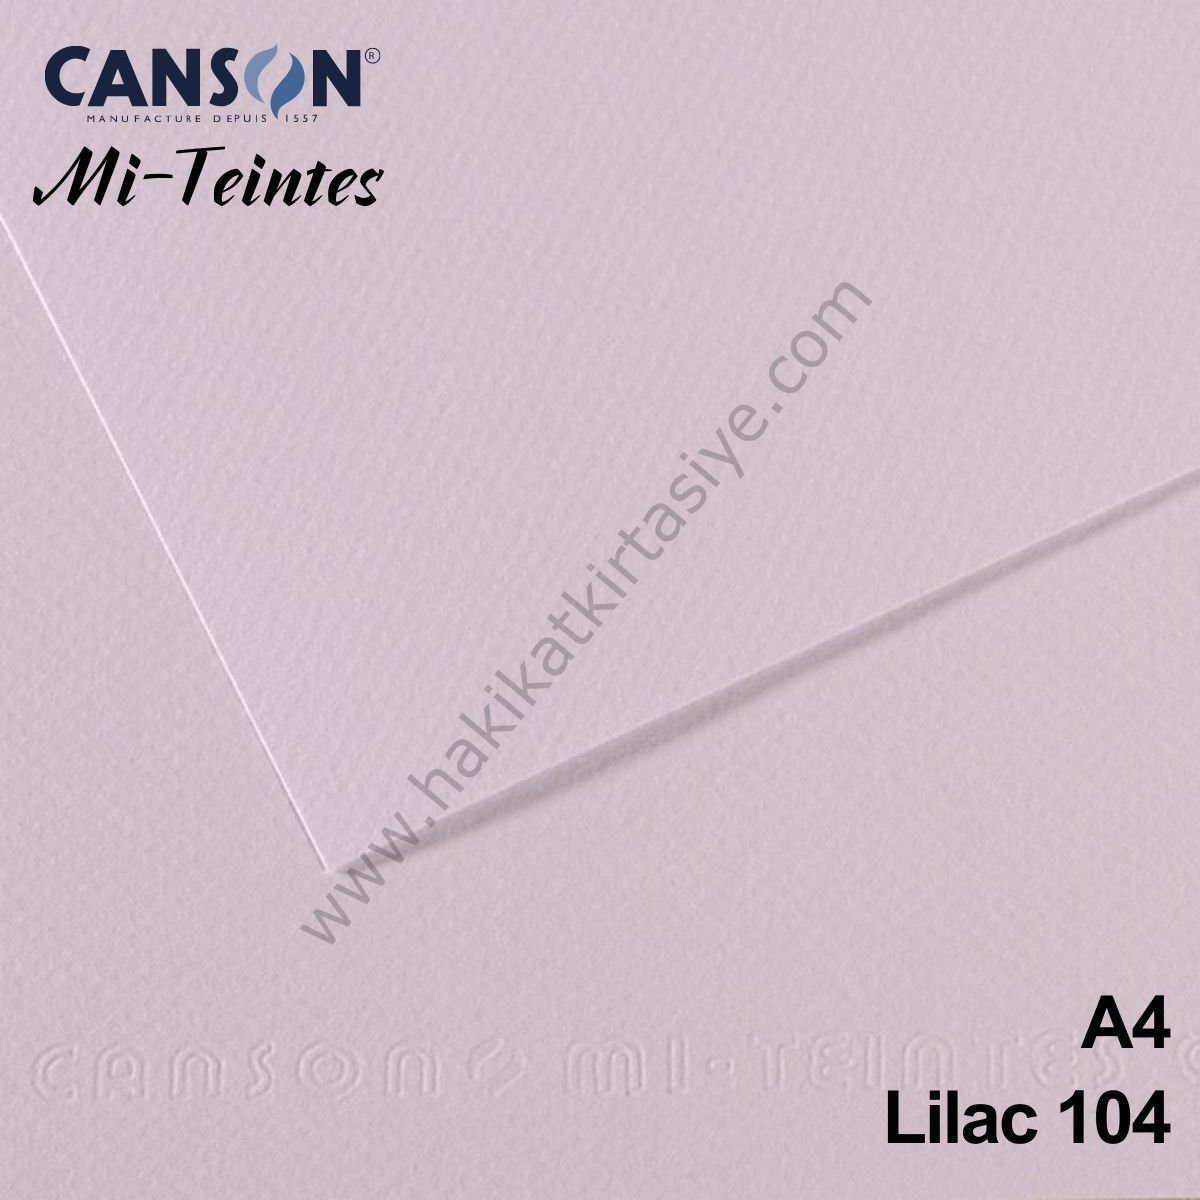 Mi-Teintes 160gr A4 104 Lilac 3lü